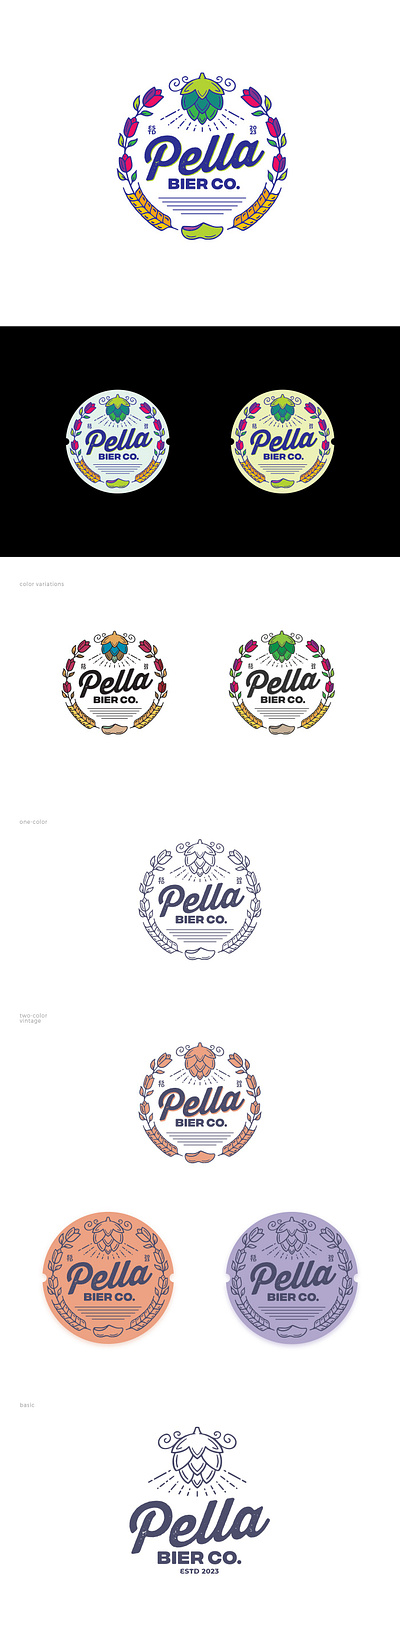 Pella Bier Co. badge beer beverage bier clogs craft hand drawn hops logo pella tulips vintage